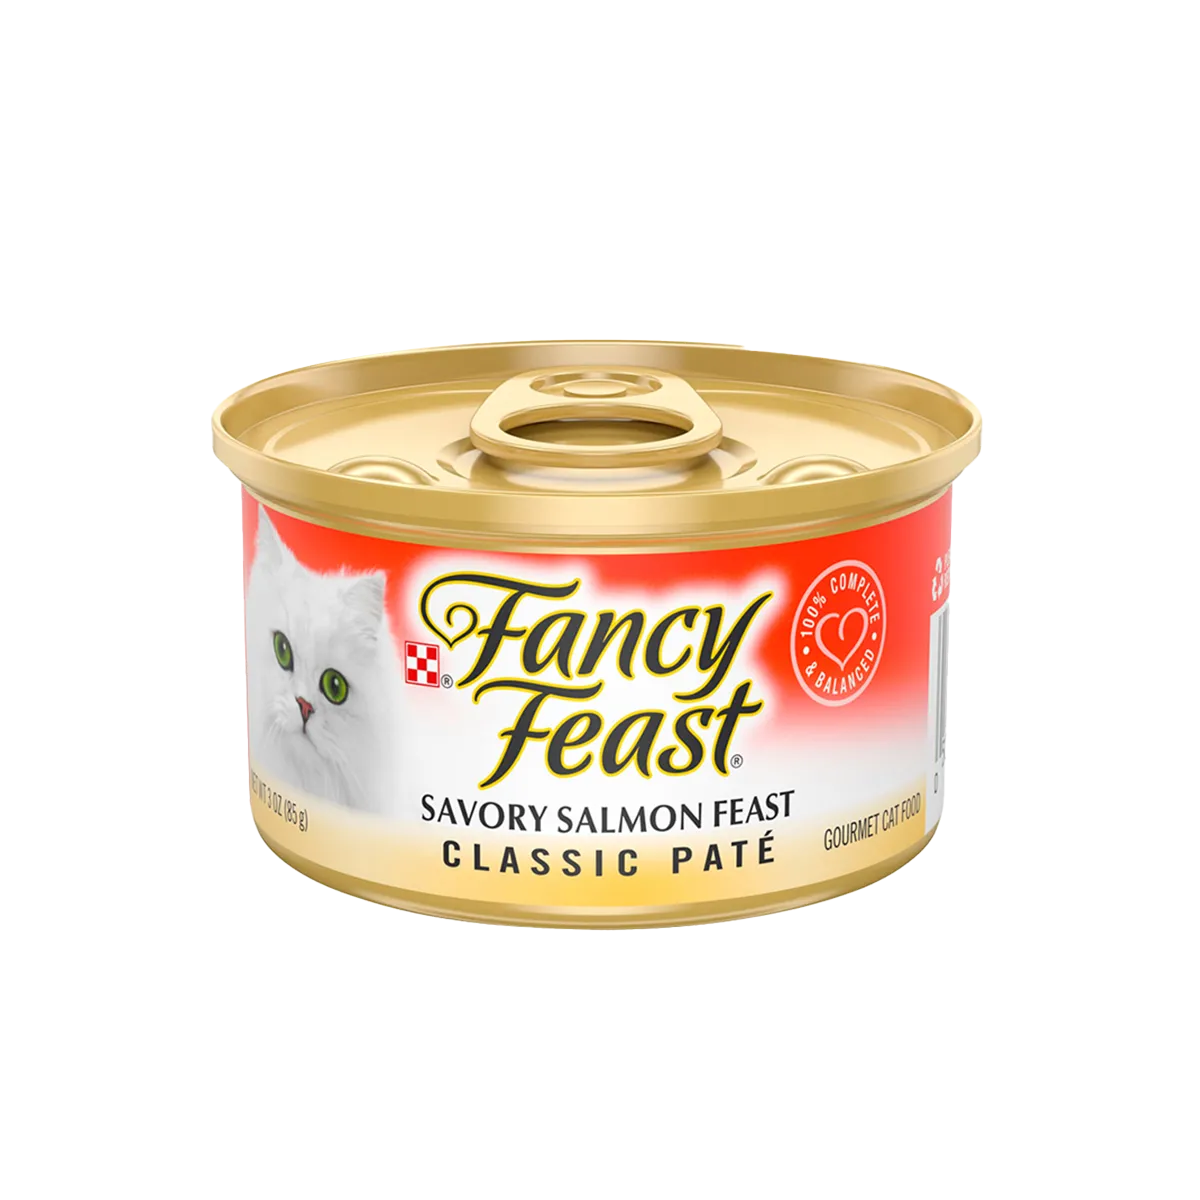 Fancy-Feast-Savory-Salmon-Feast-Classic-Paté-01